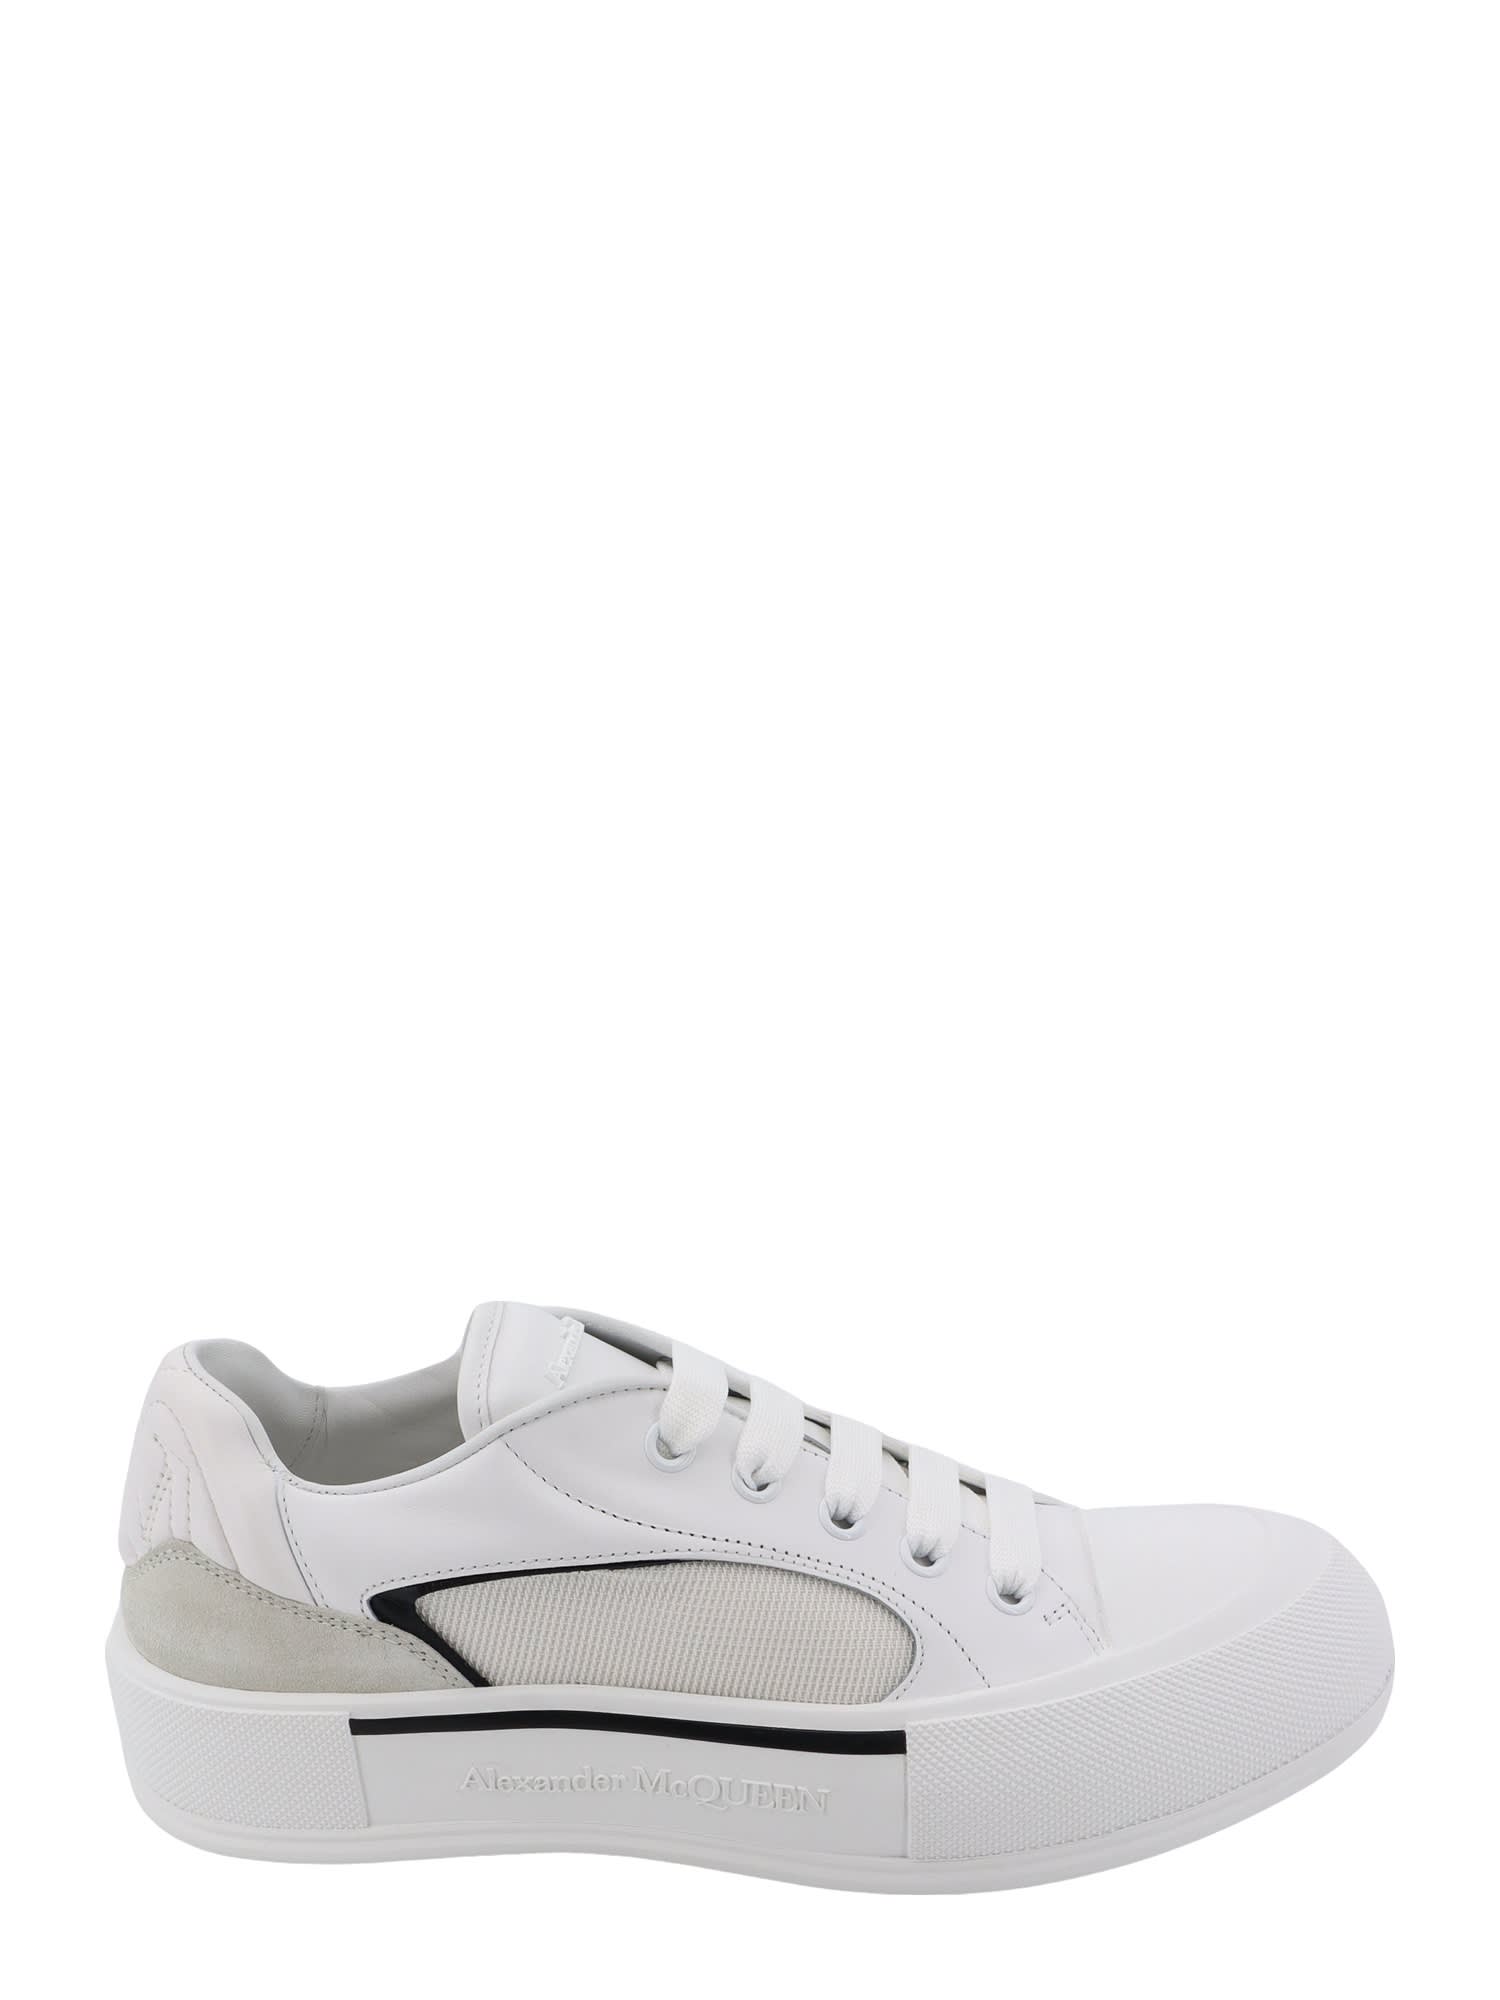 Shop Alexander Mcqueen Deck Plimsoll Sneakers In White/black